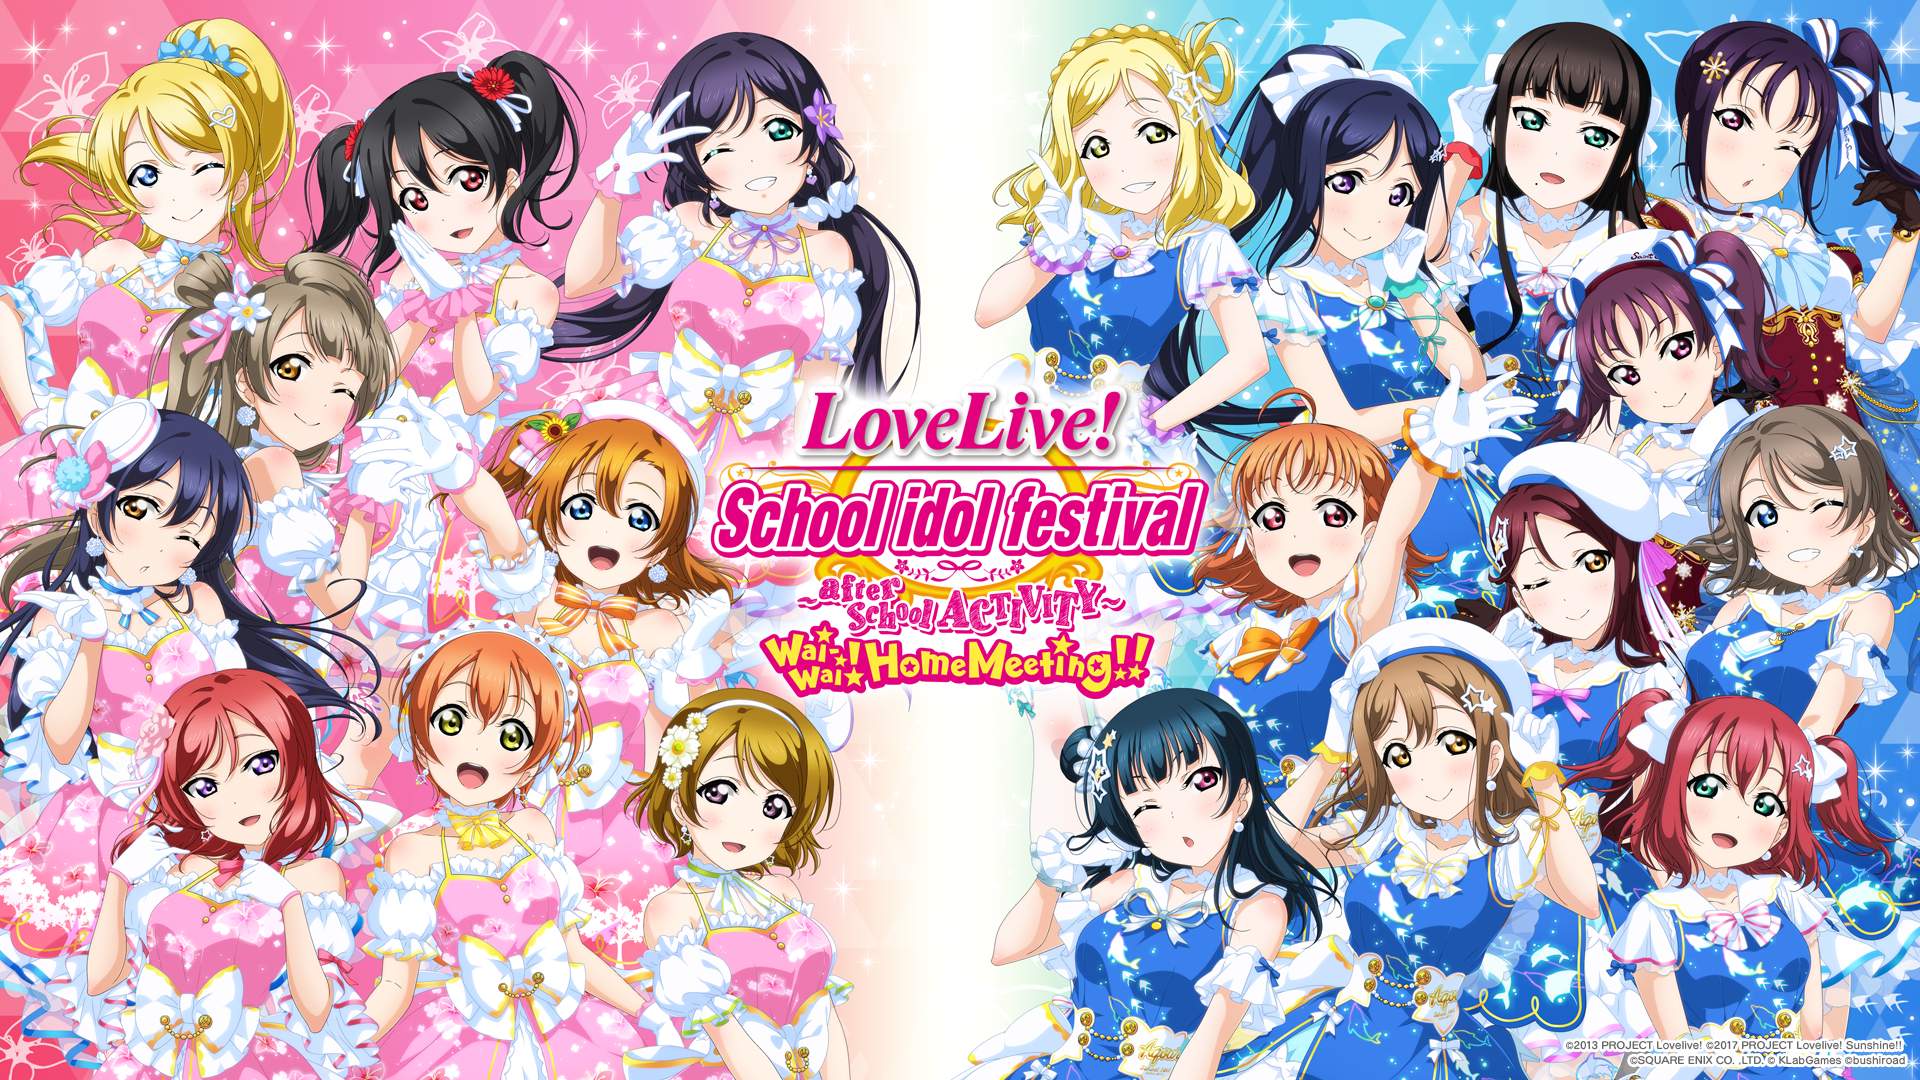 [Image: love_live_school_idol_festival_after_sch...ting-1.jpg]